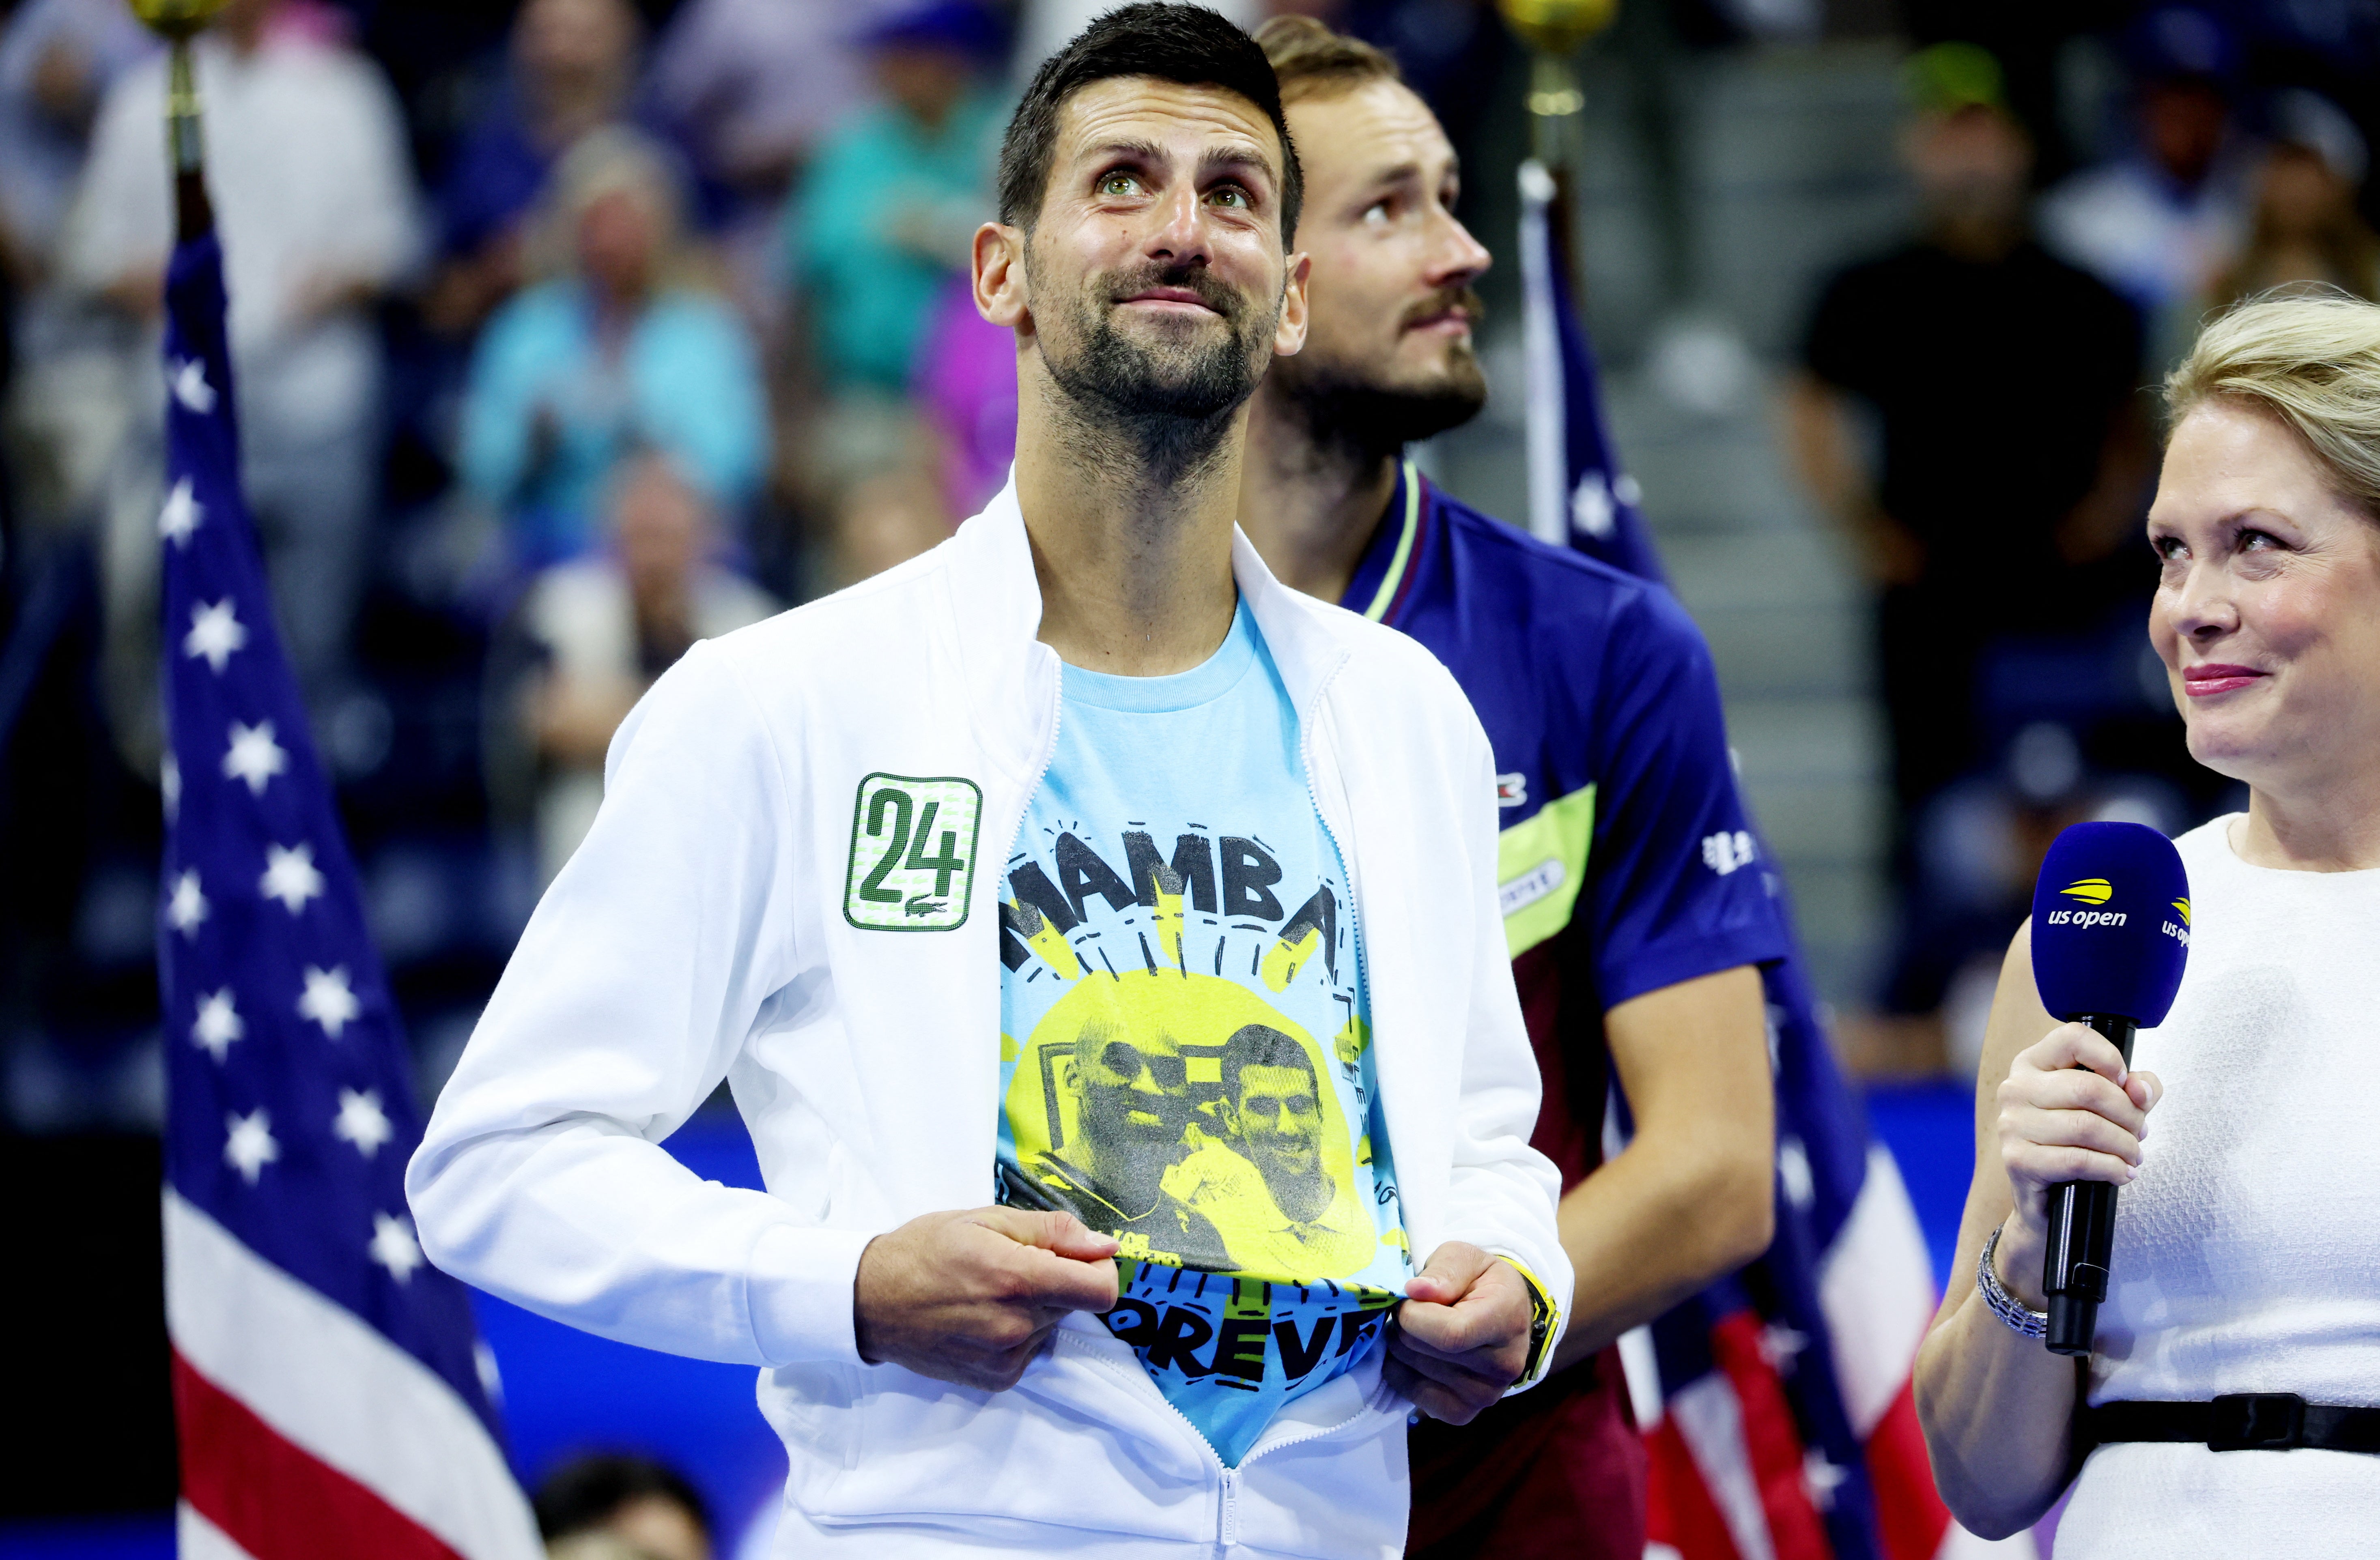 Novak Djokovic celebrates while wearing a shirt with an image of Kobe Bryant